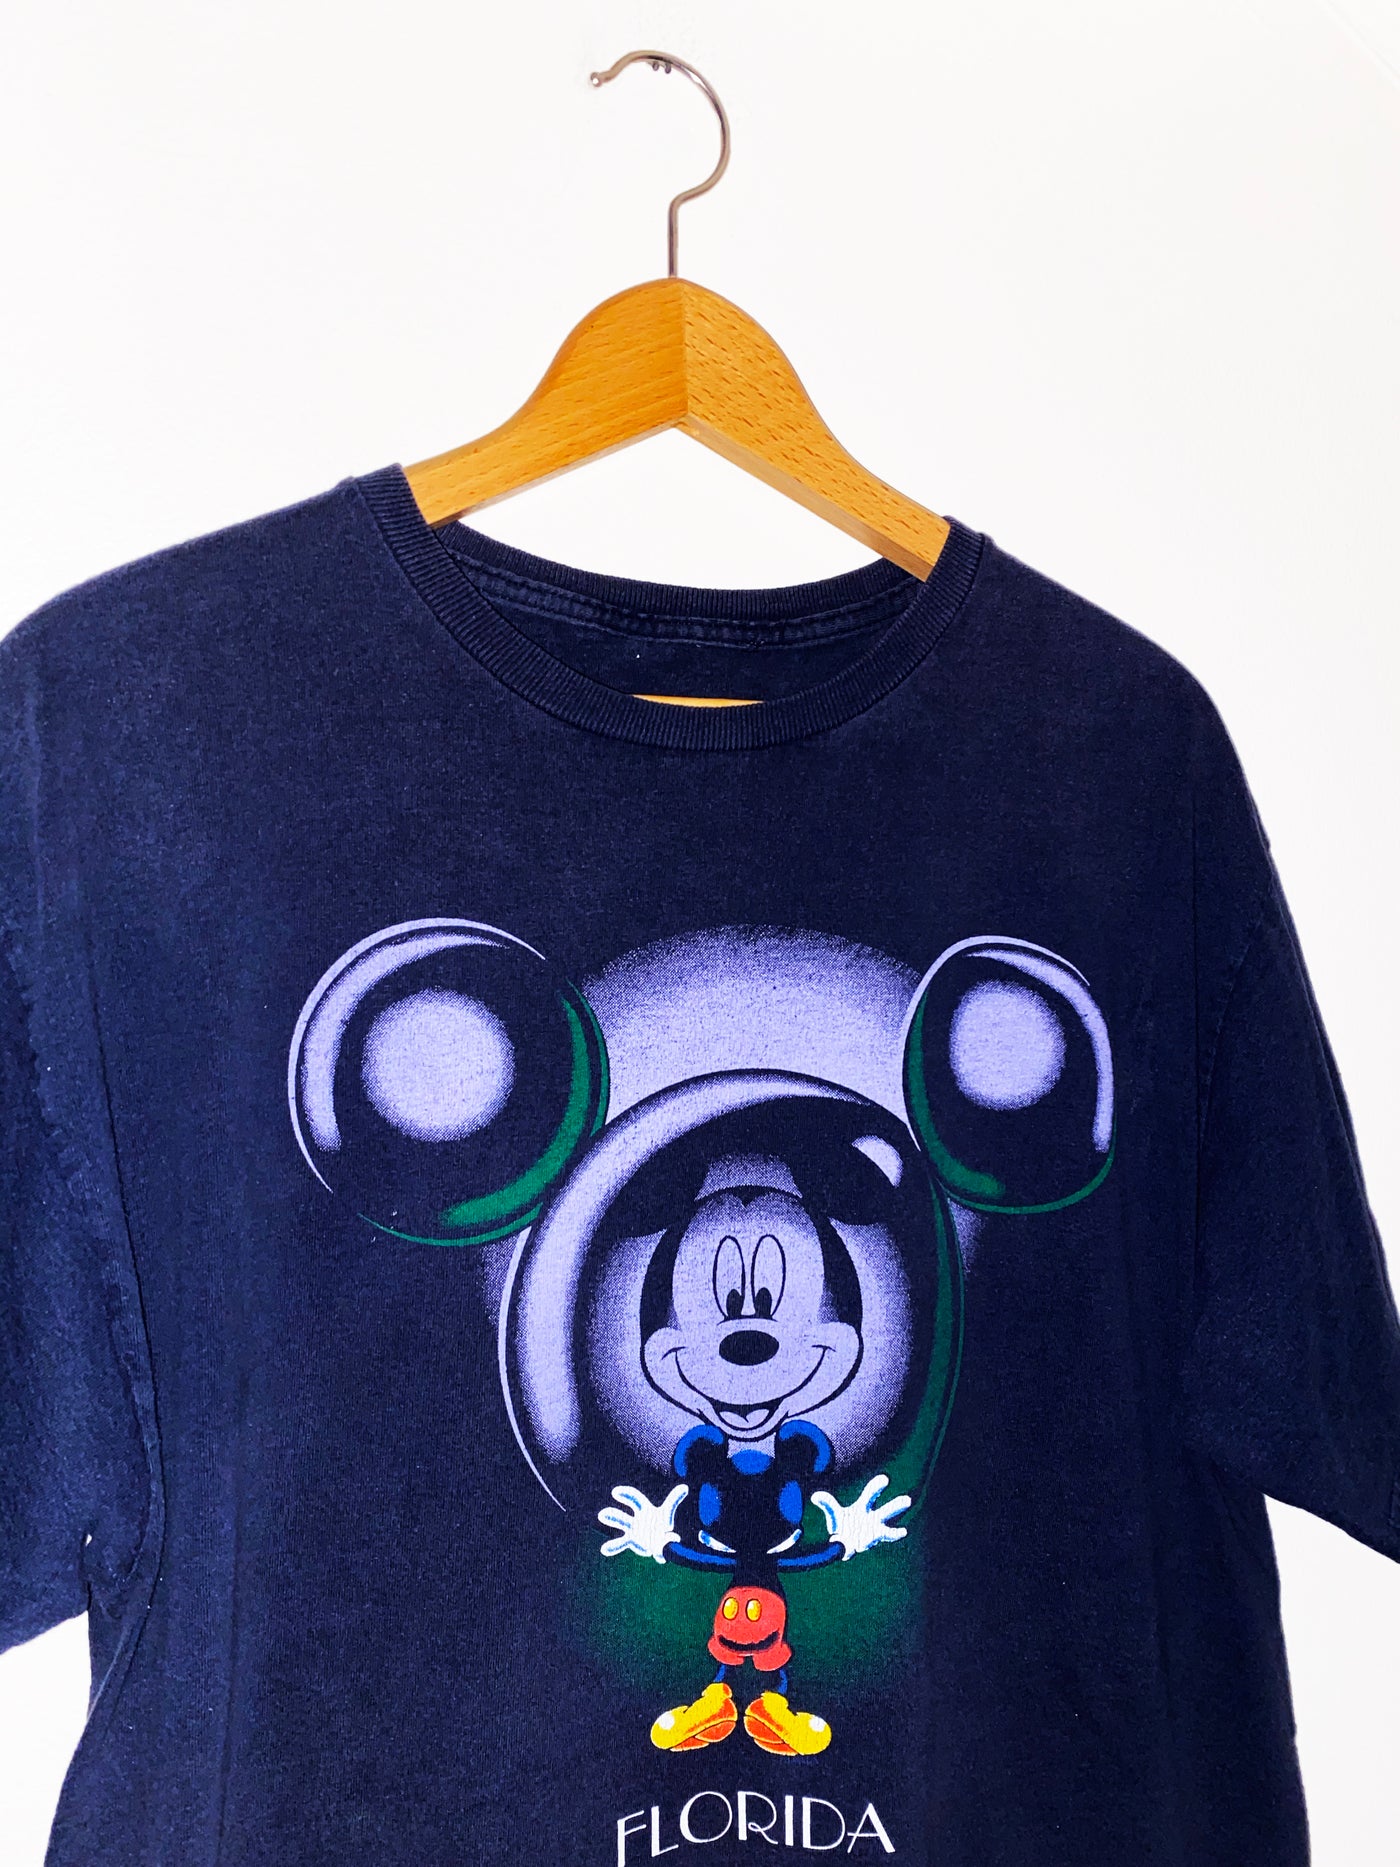 Vintage Mickey Mouse Florida Disney T-Shirt